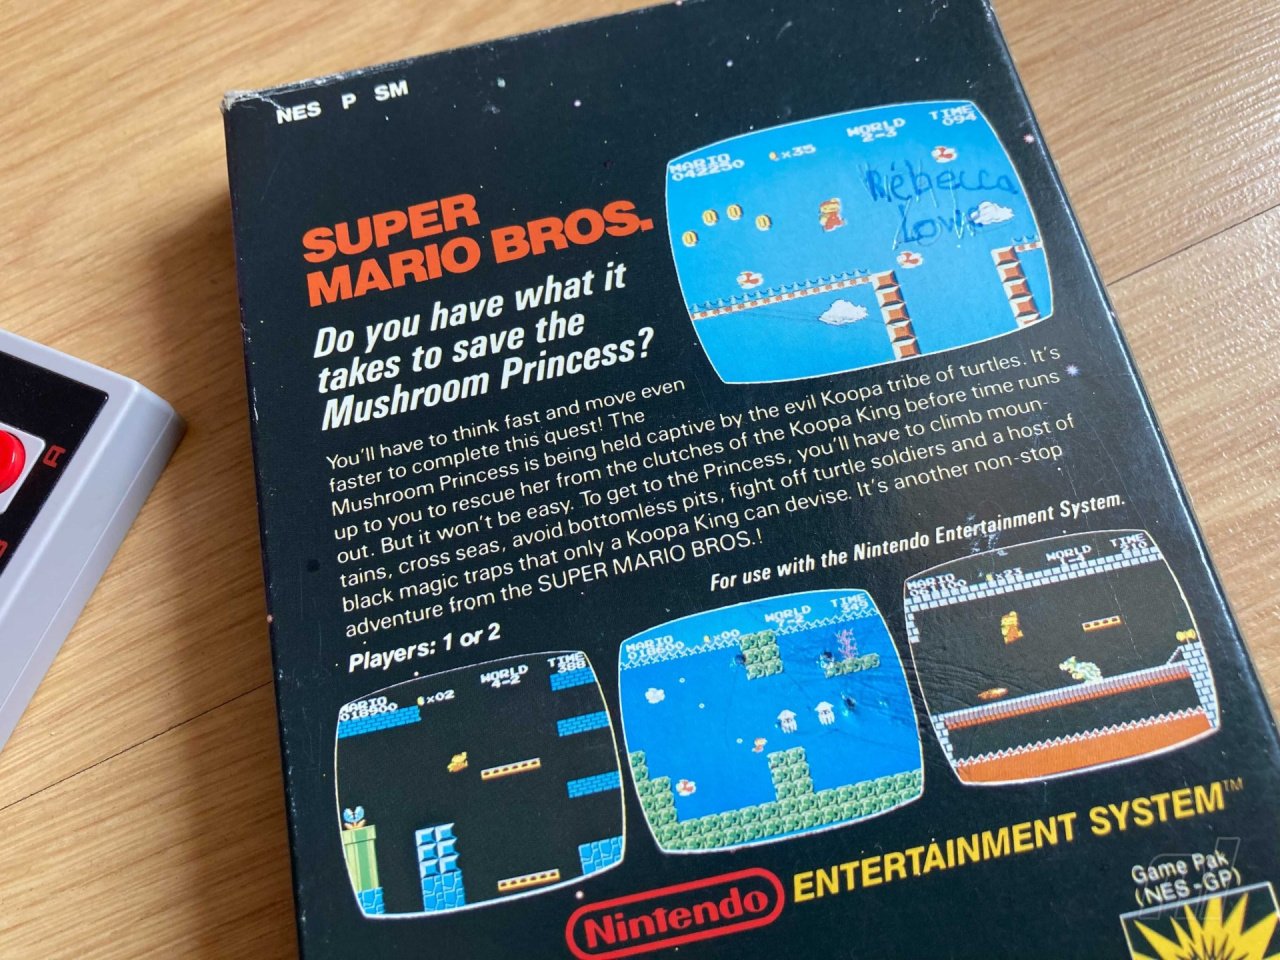 A rare mint copy of Super Mario Bros for the NES breaks records